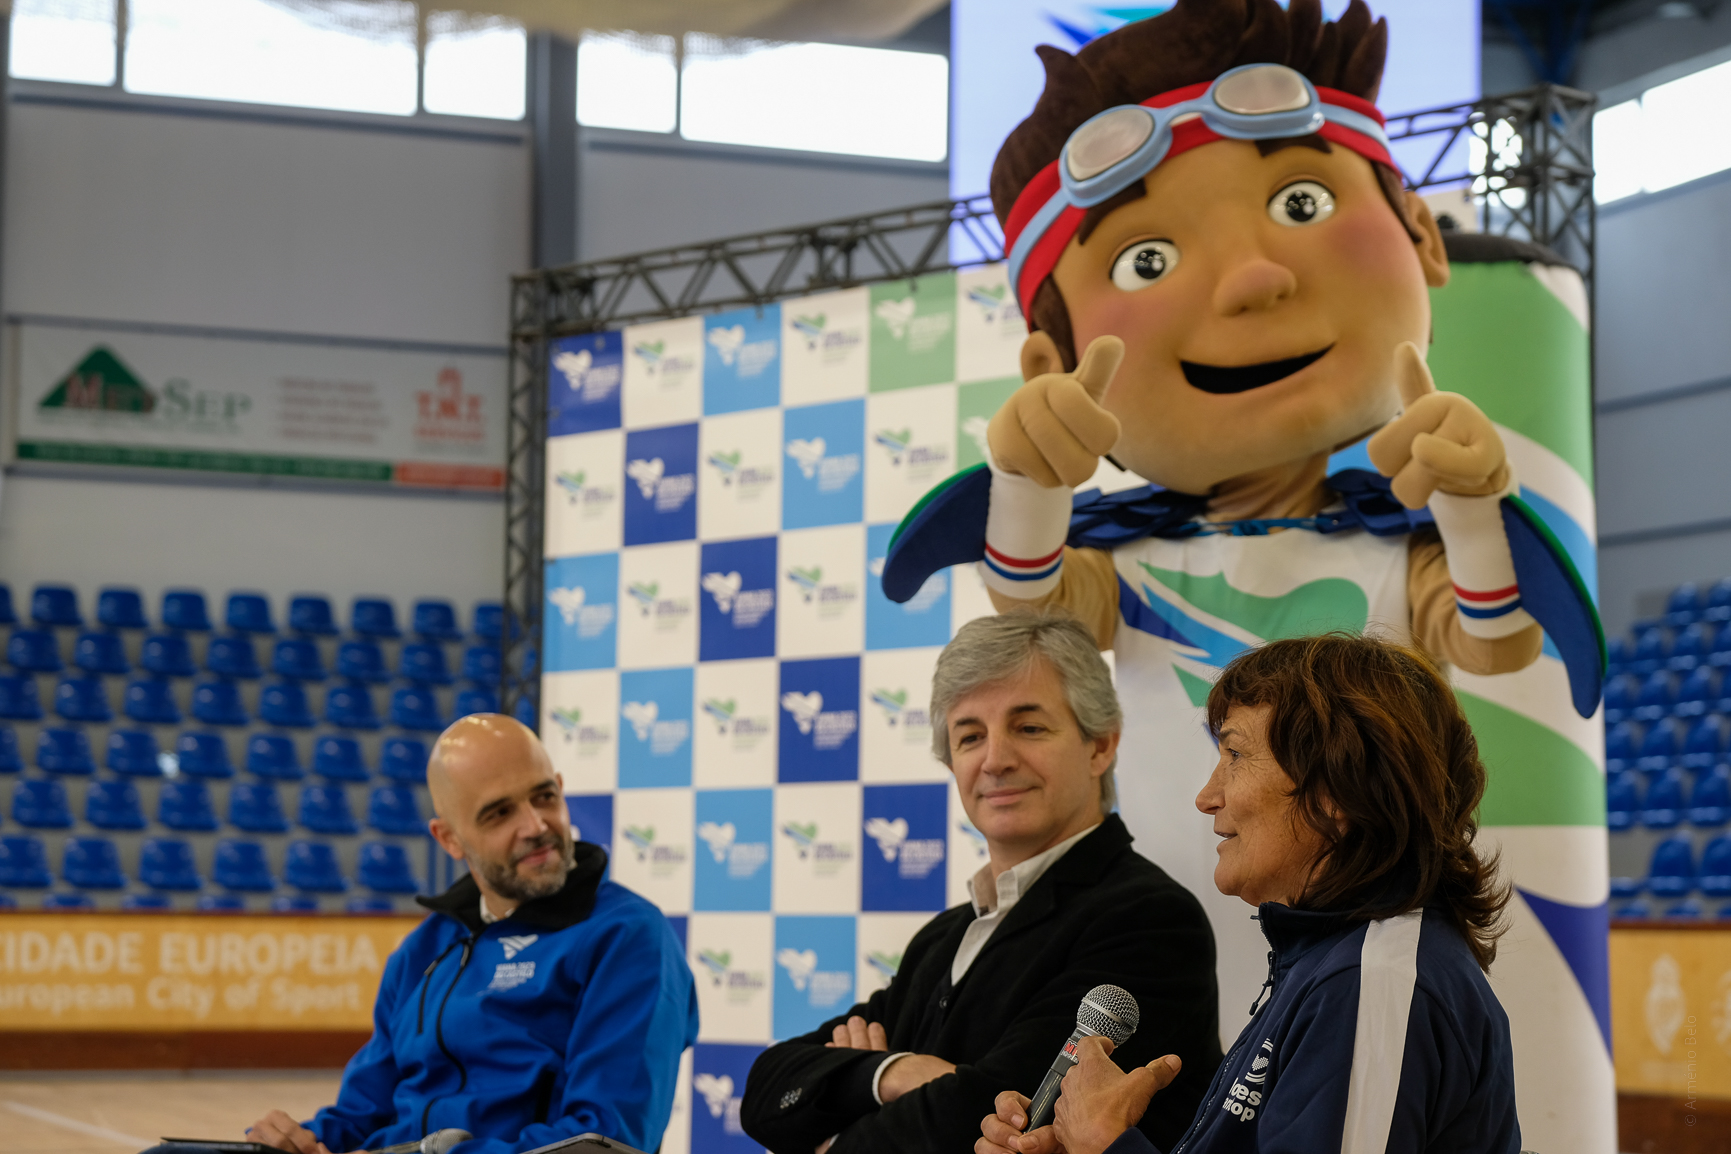 XXIV Meia Maratona Manuela Machado quer ser “a festa do desporto e do atletismo” e garantir 4.000 participantes